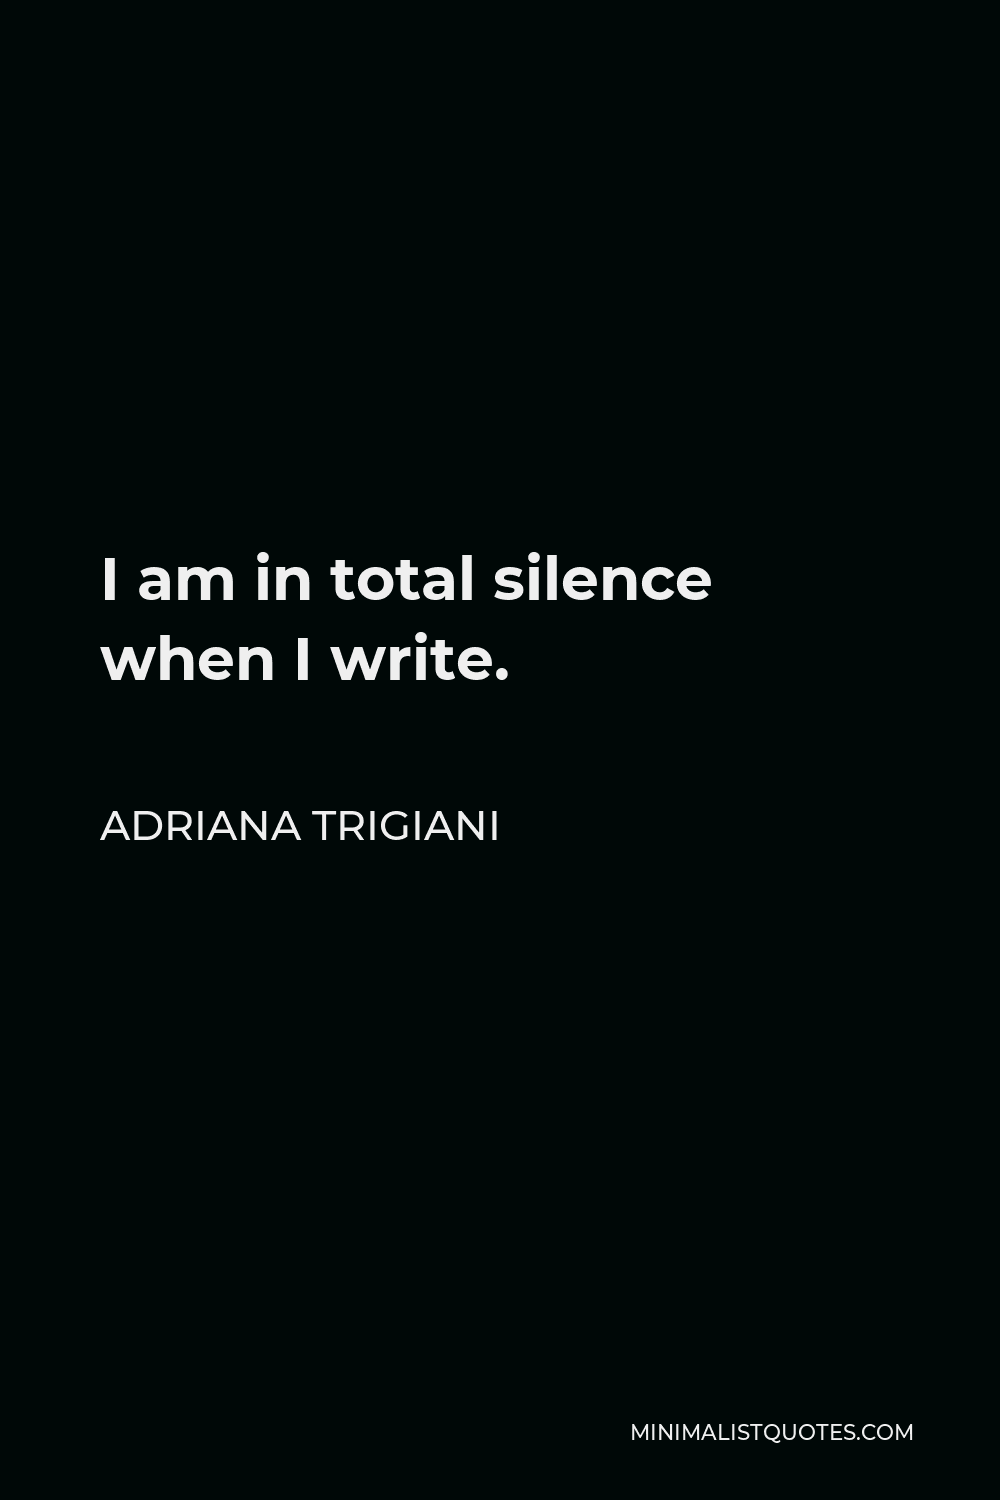 Adriana Trigiani Quote - I am in total silence when I write.